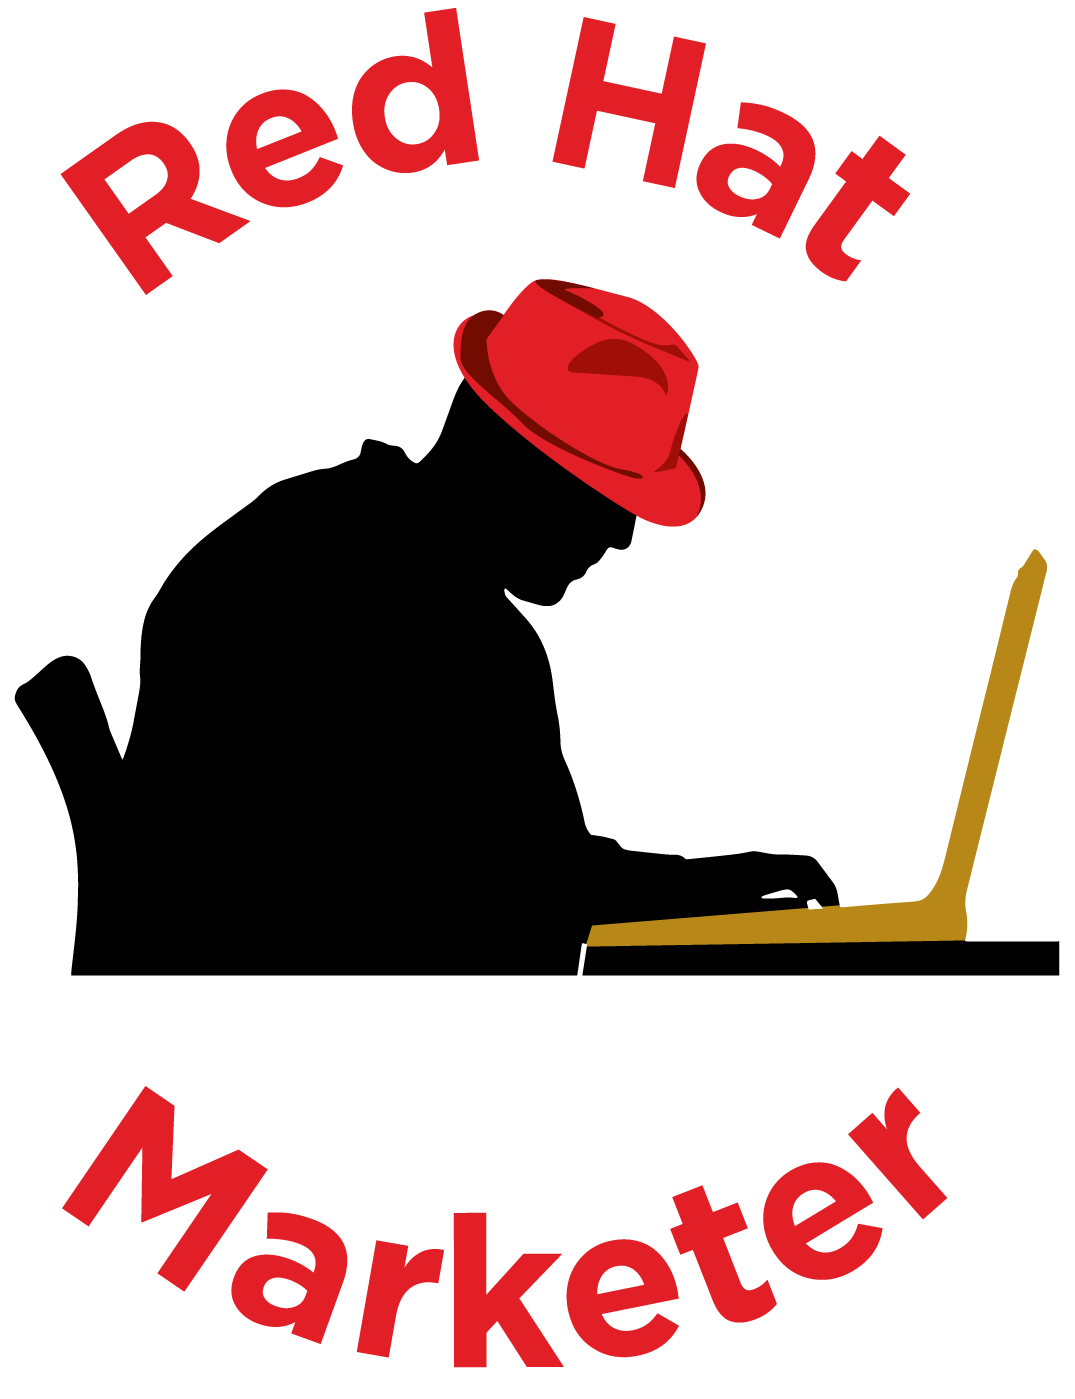 Red Hat Marketer